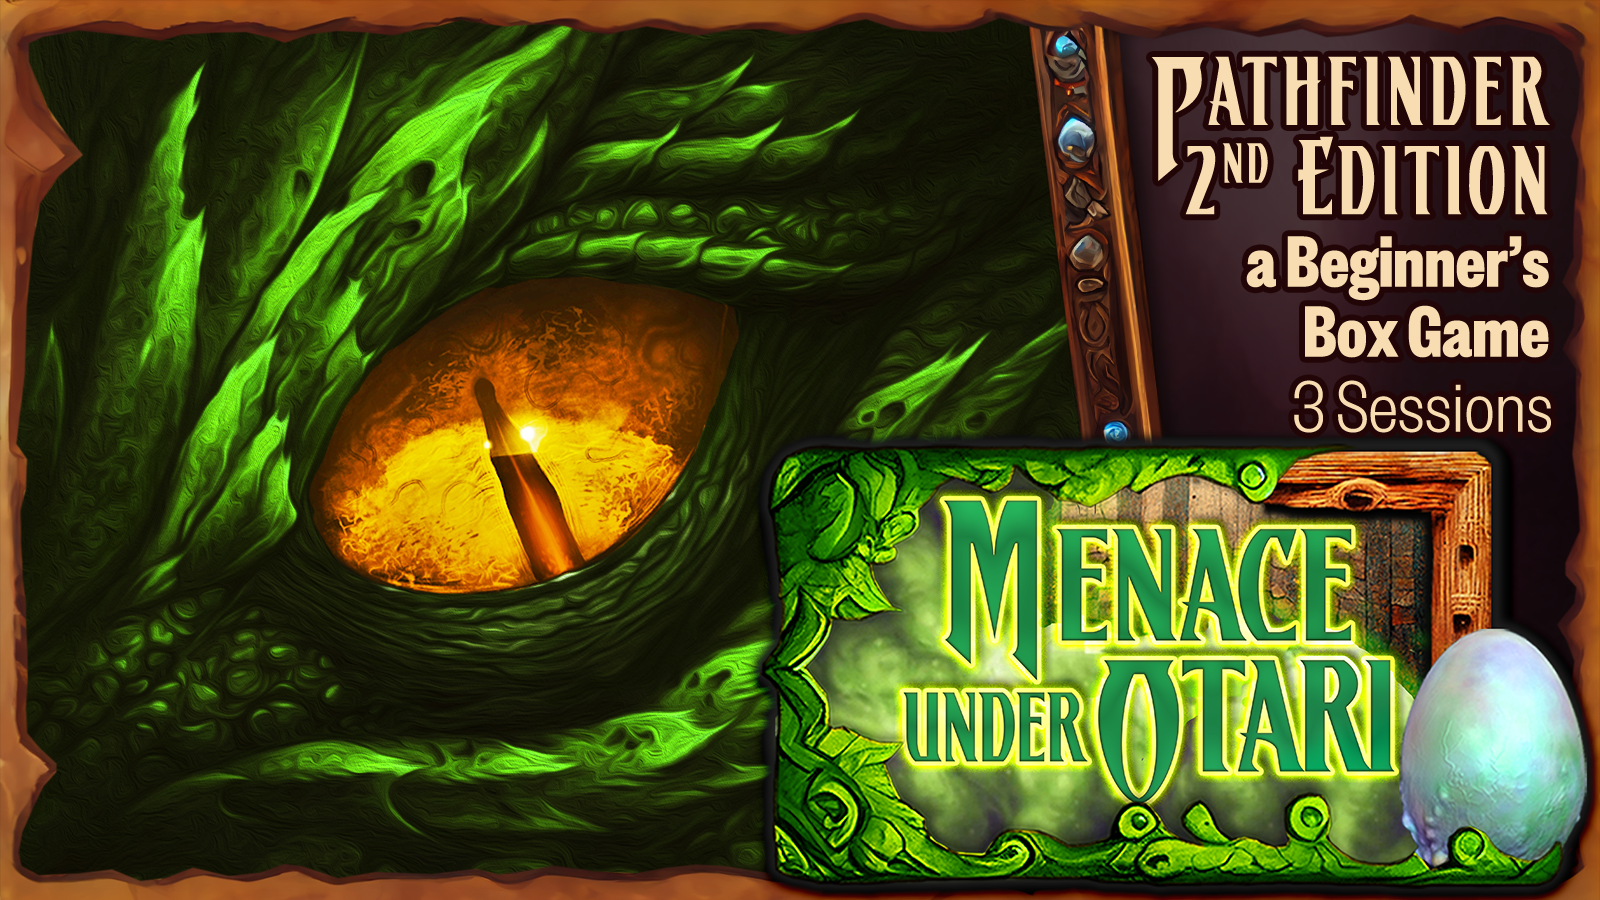 Menace Under Otari - Start Playing Pathfinder 2E with Beginner's Box Game